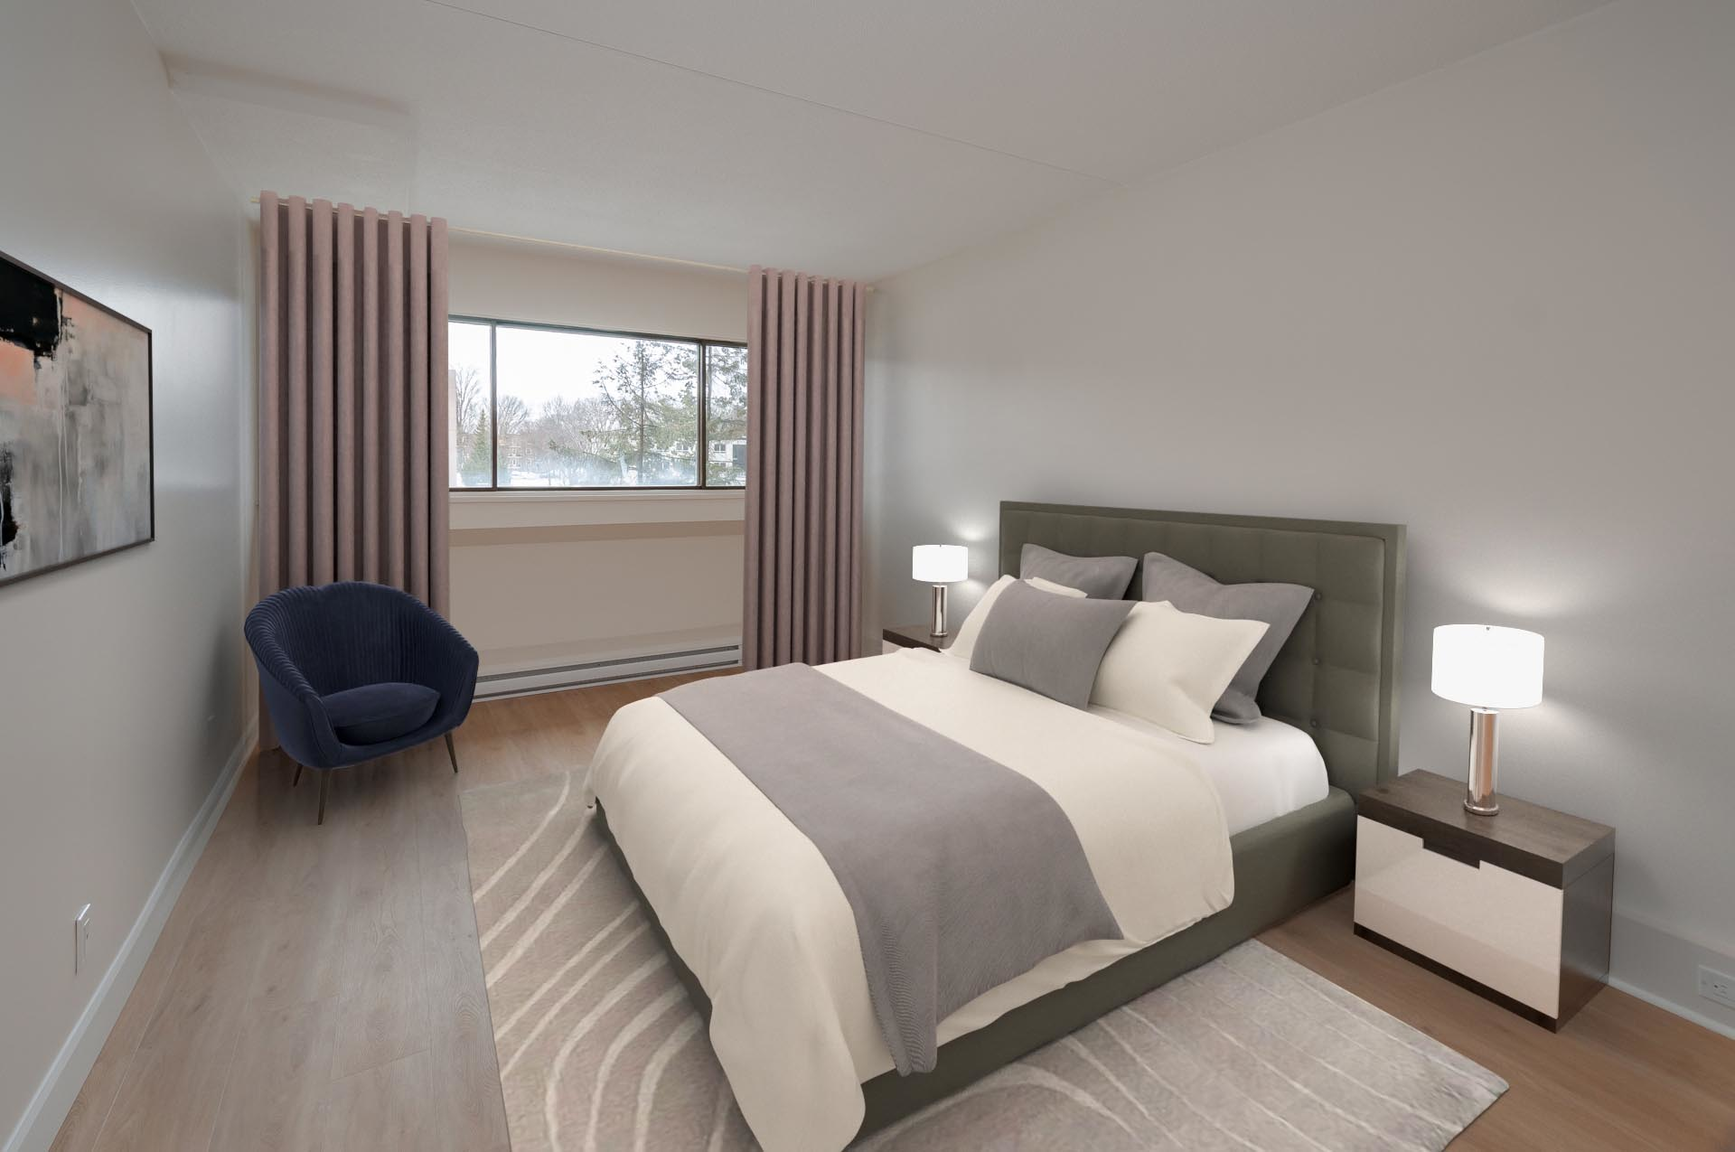 1 bedroom Apartments for rent in Quebec City at Les Jardins de Merici - Photo 18 - RentersPages – L407121